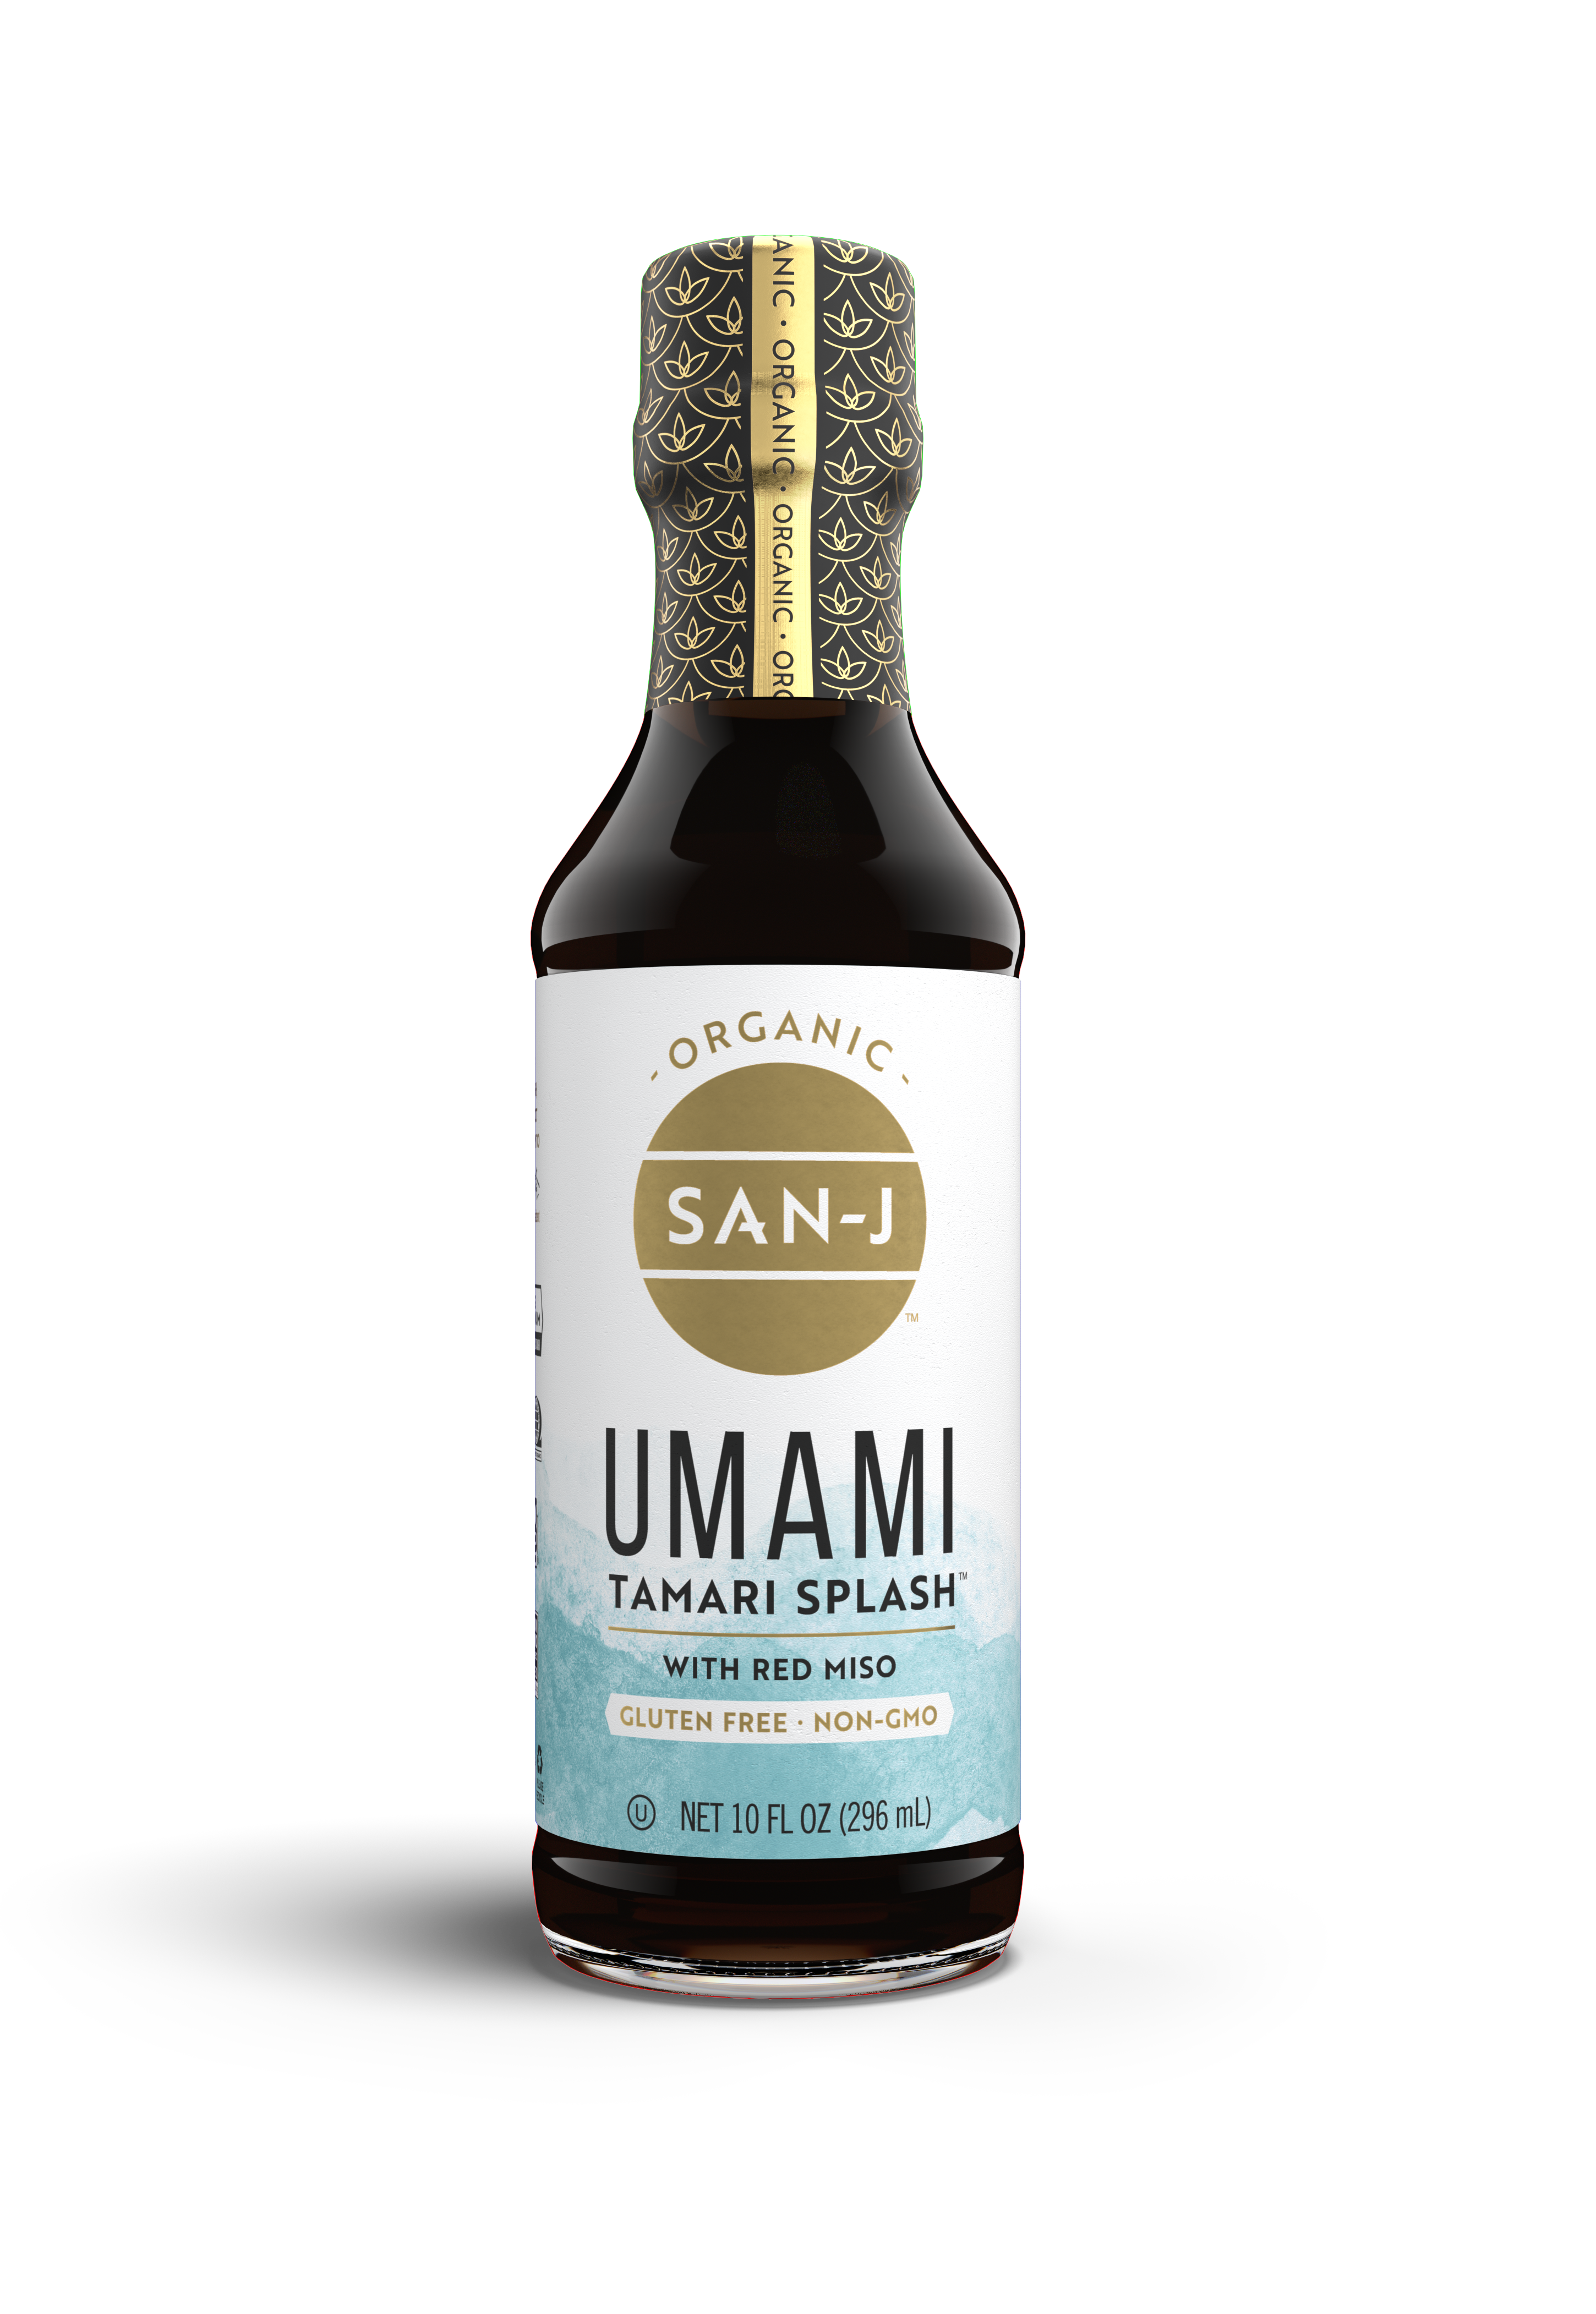 Tamari splash unami robust flavor organic 296ml